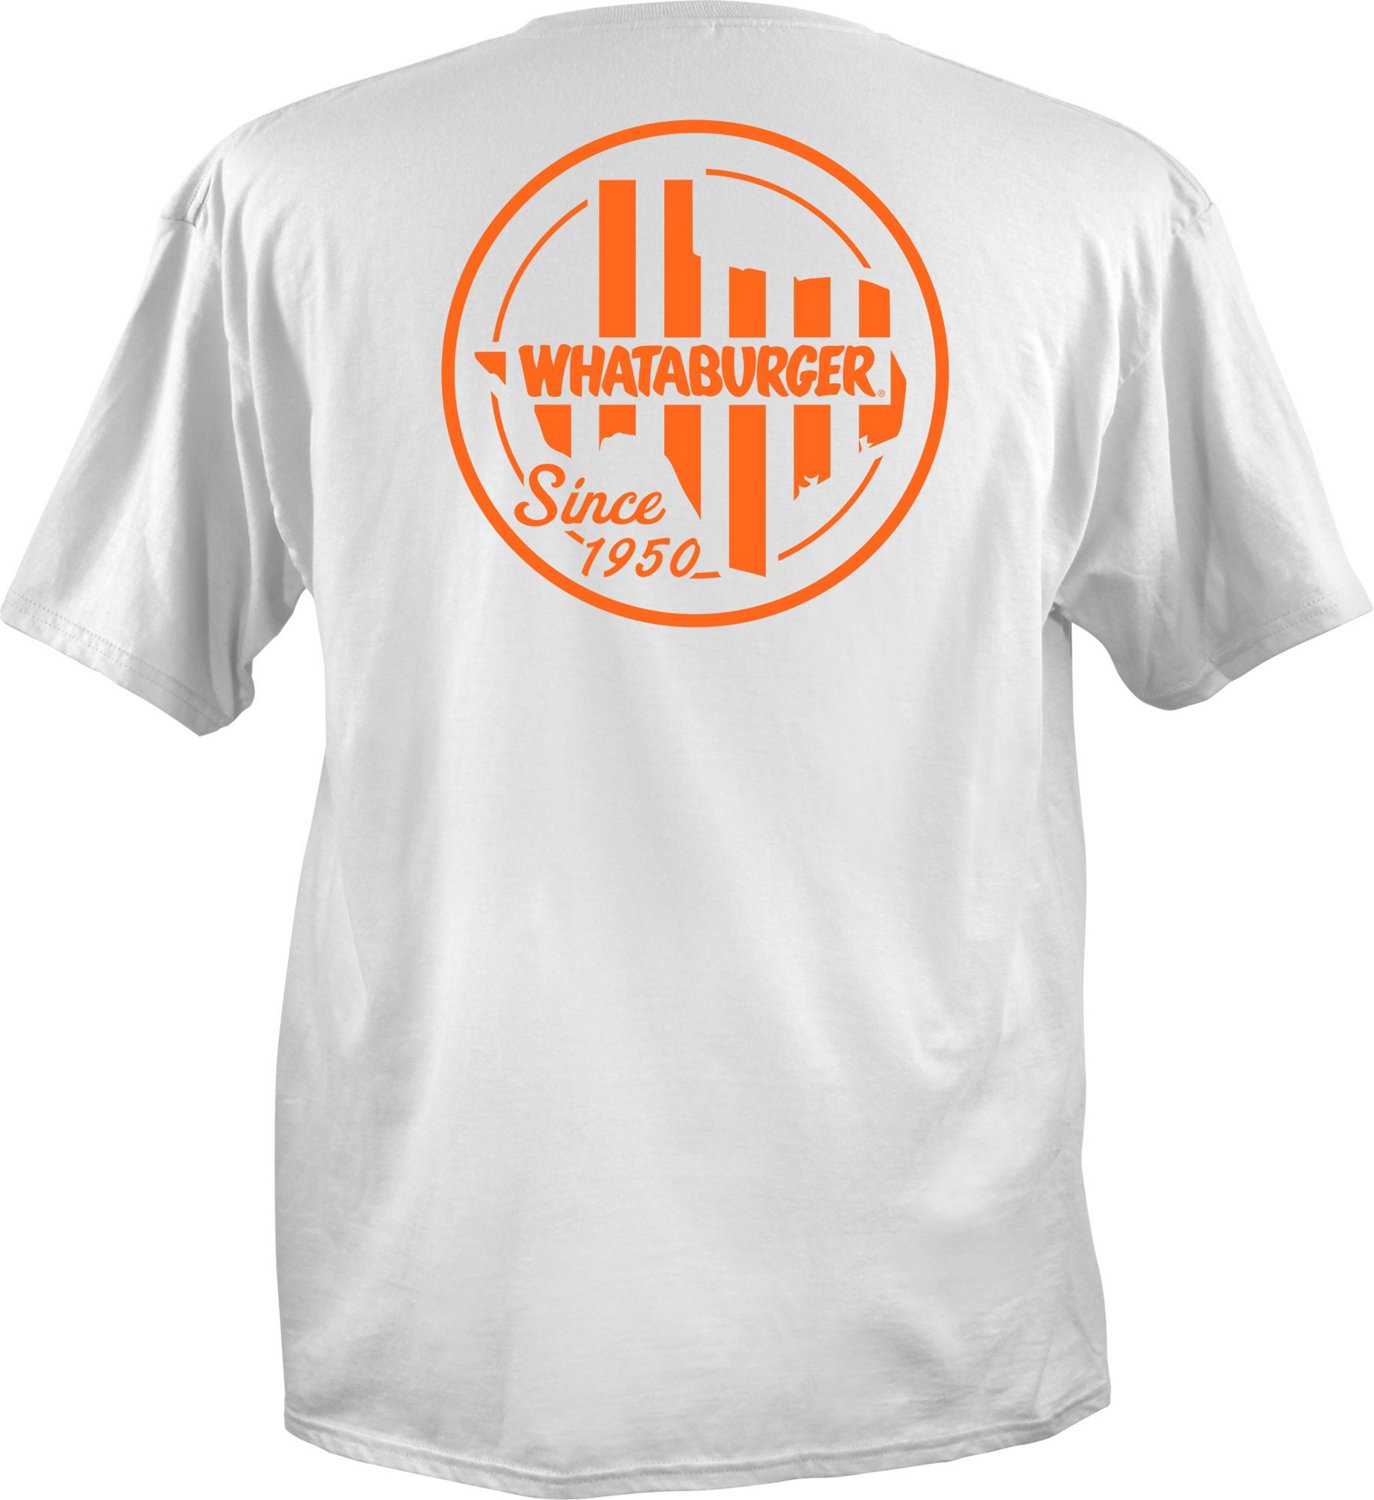 Whataburger Men's WB Square Graphic T-shirt